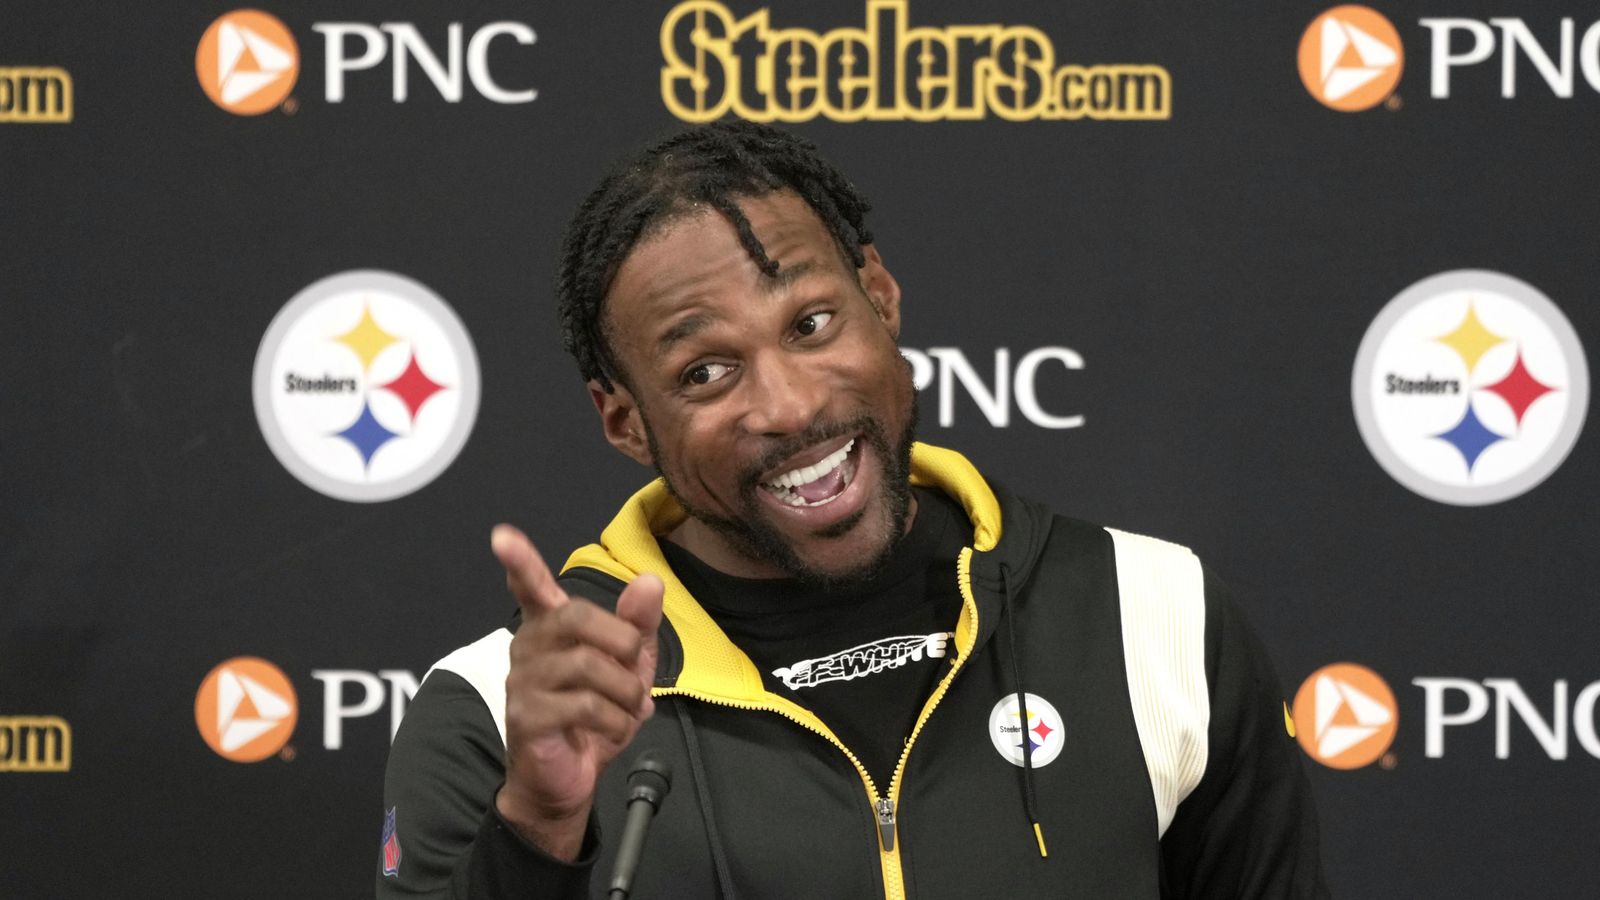 Pittsburgh Steelers.com